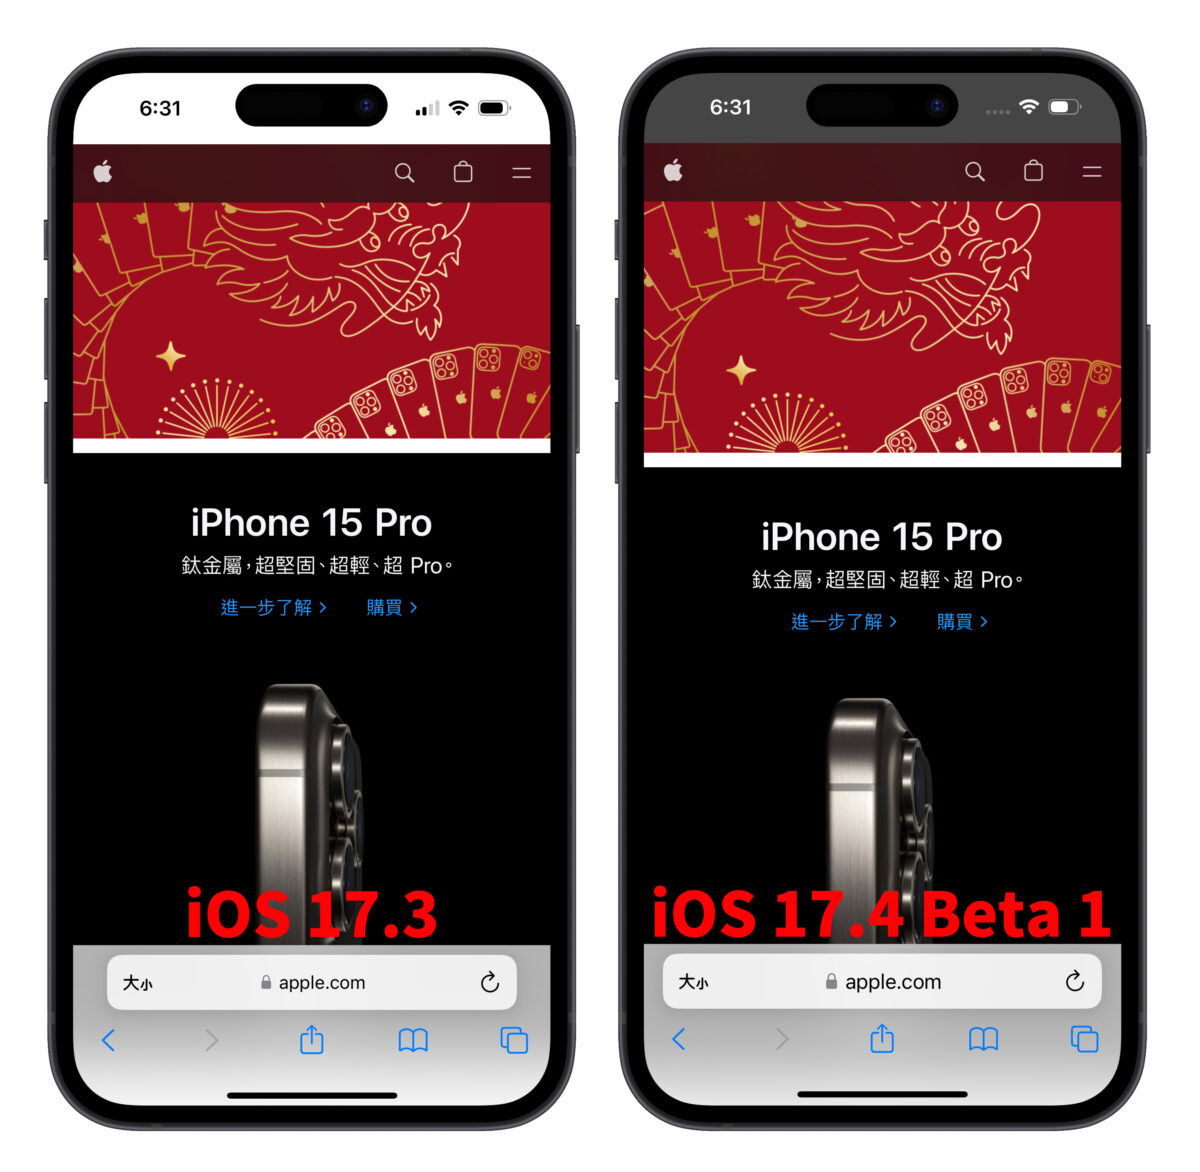 iOS iPhone iOS 17 iOS 17.4 iOS 17.4 Beta 1 Beta developer beta